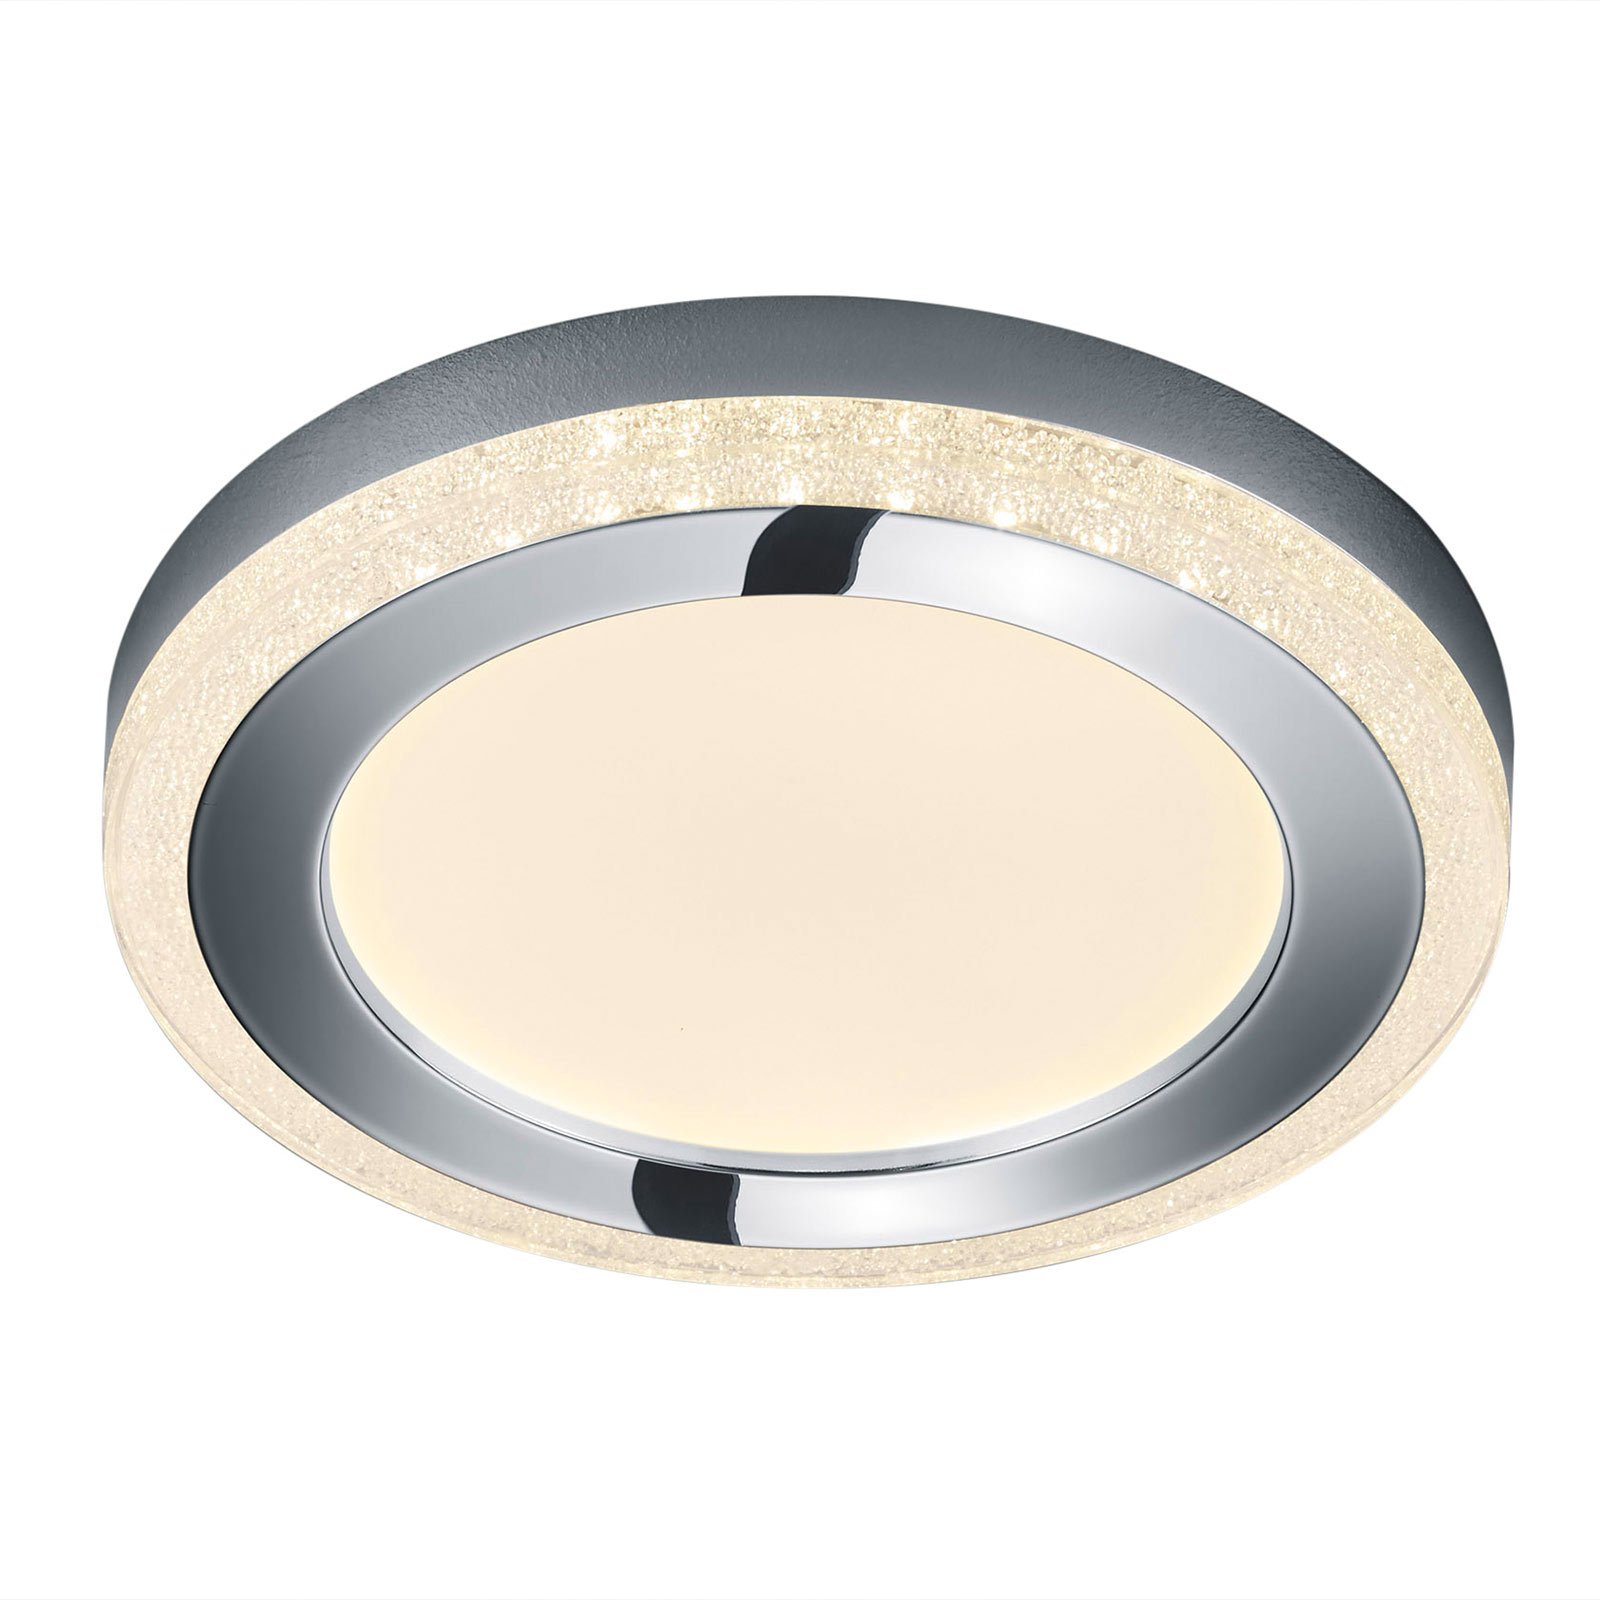 LED-taklampe Slide, hvit, rund, Ø 40 cm